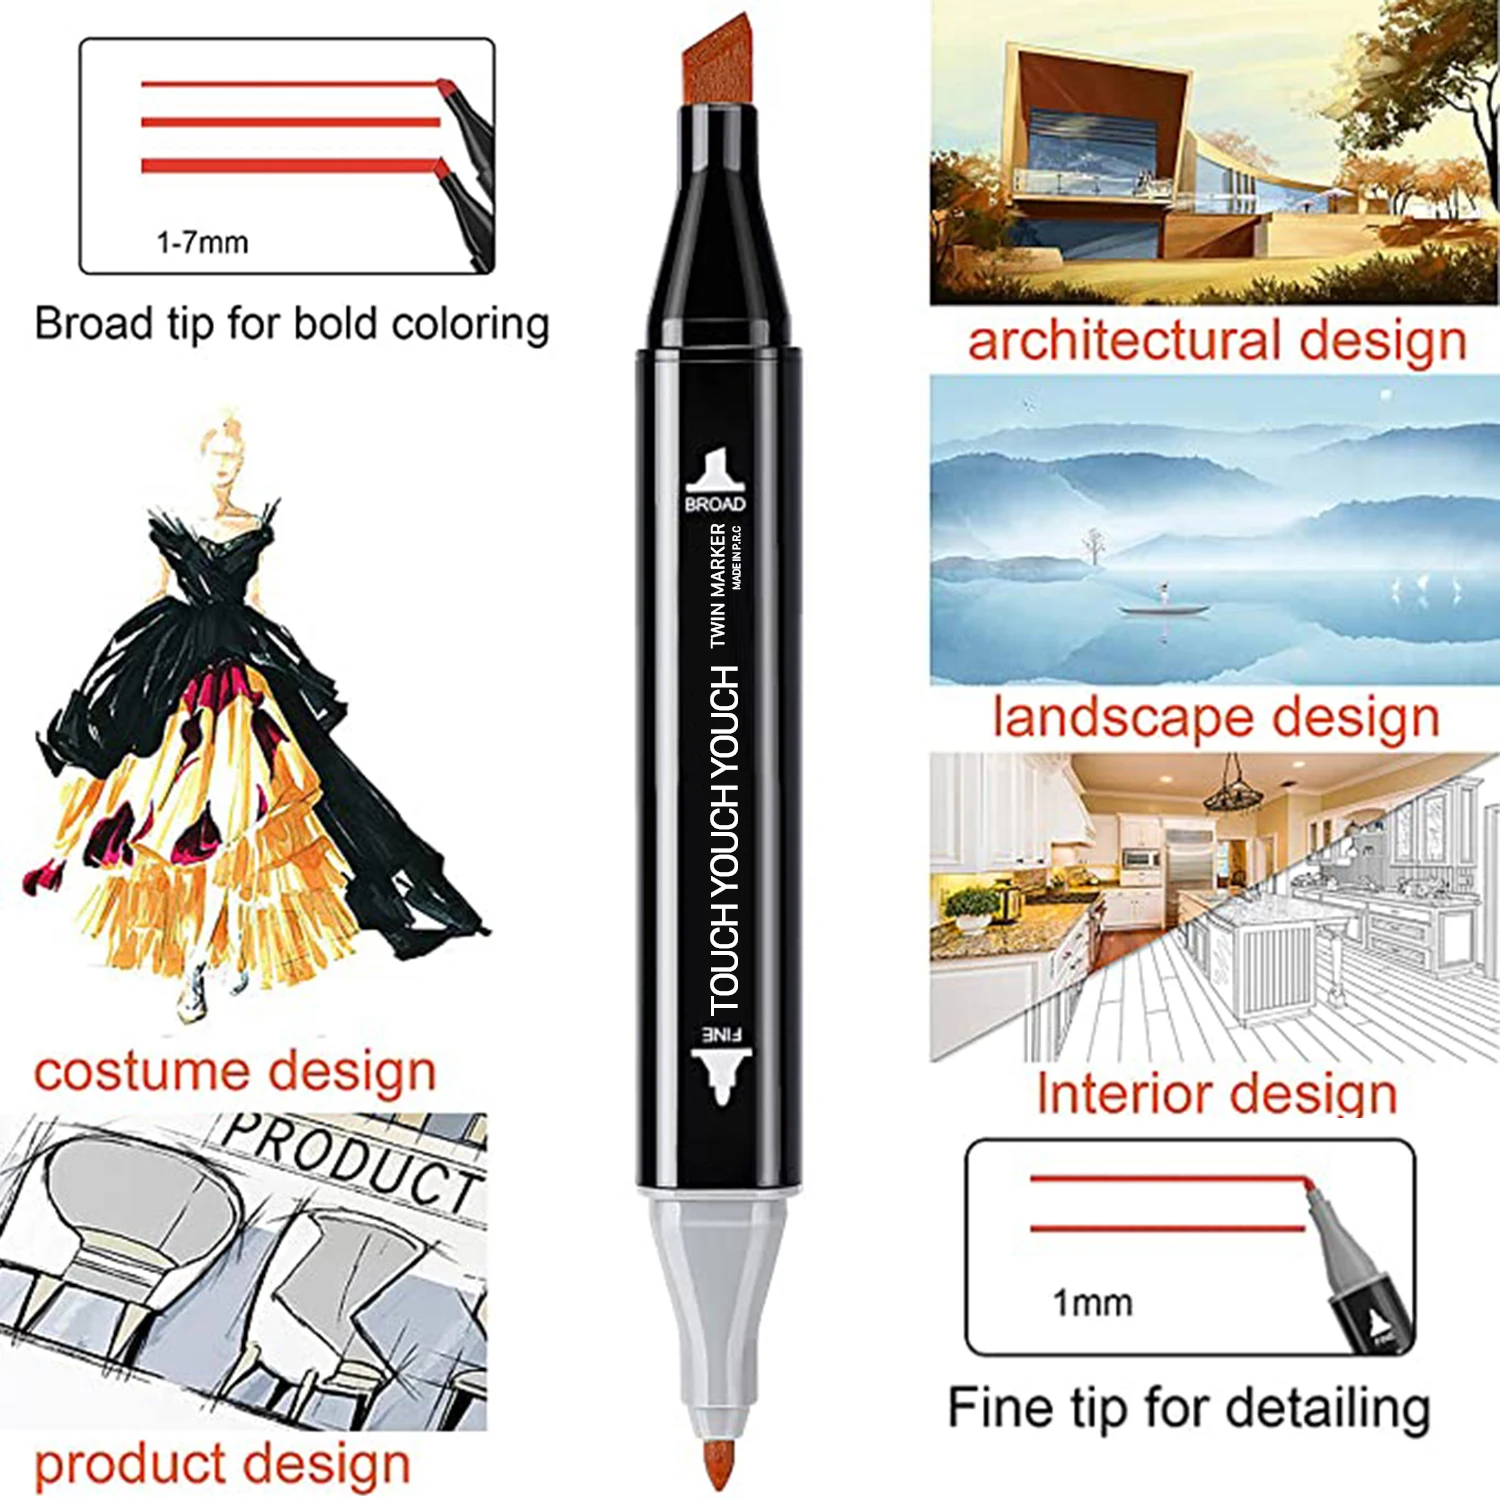 12pcs Black Dual Tip Kids Sketch Drawing Marker Pens